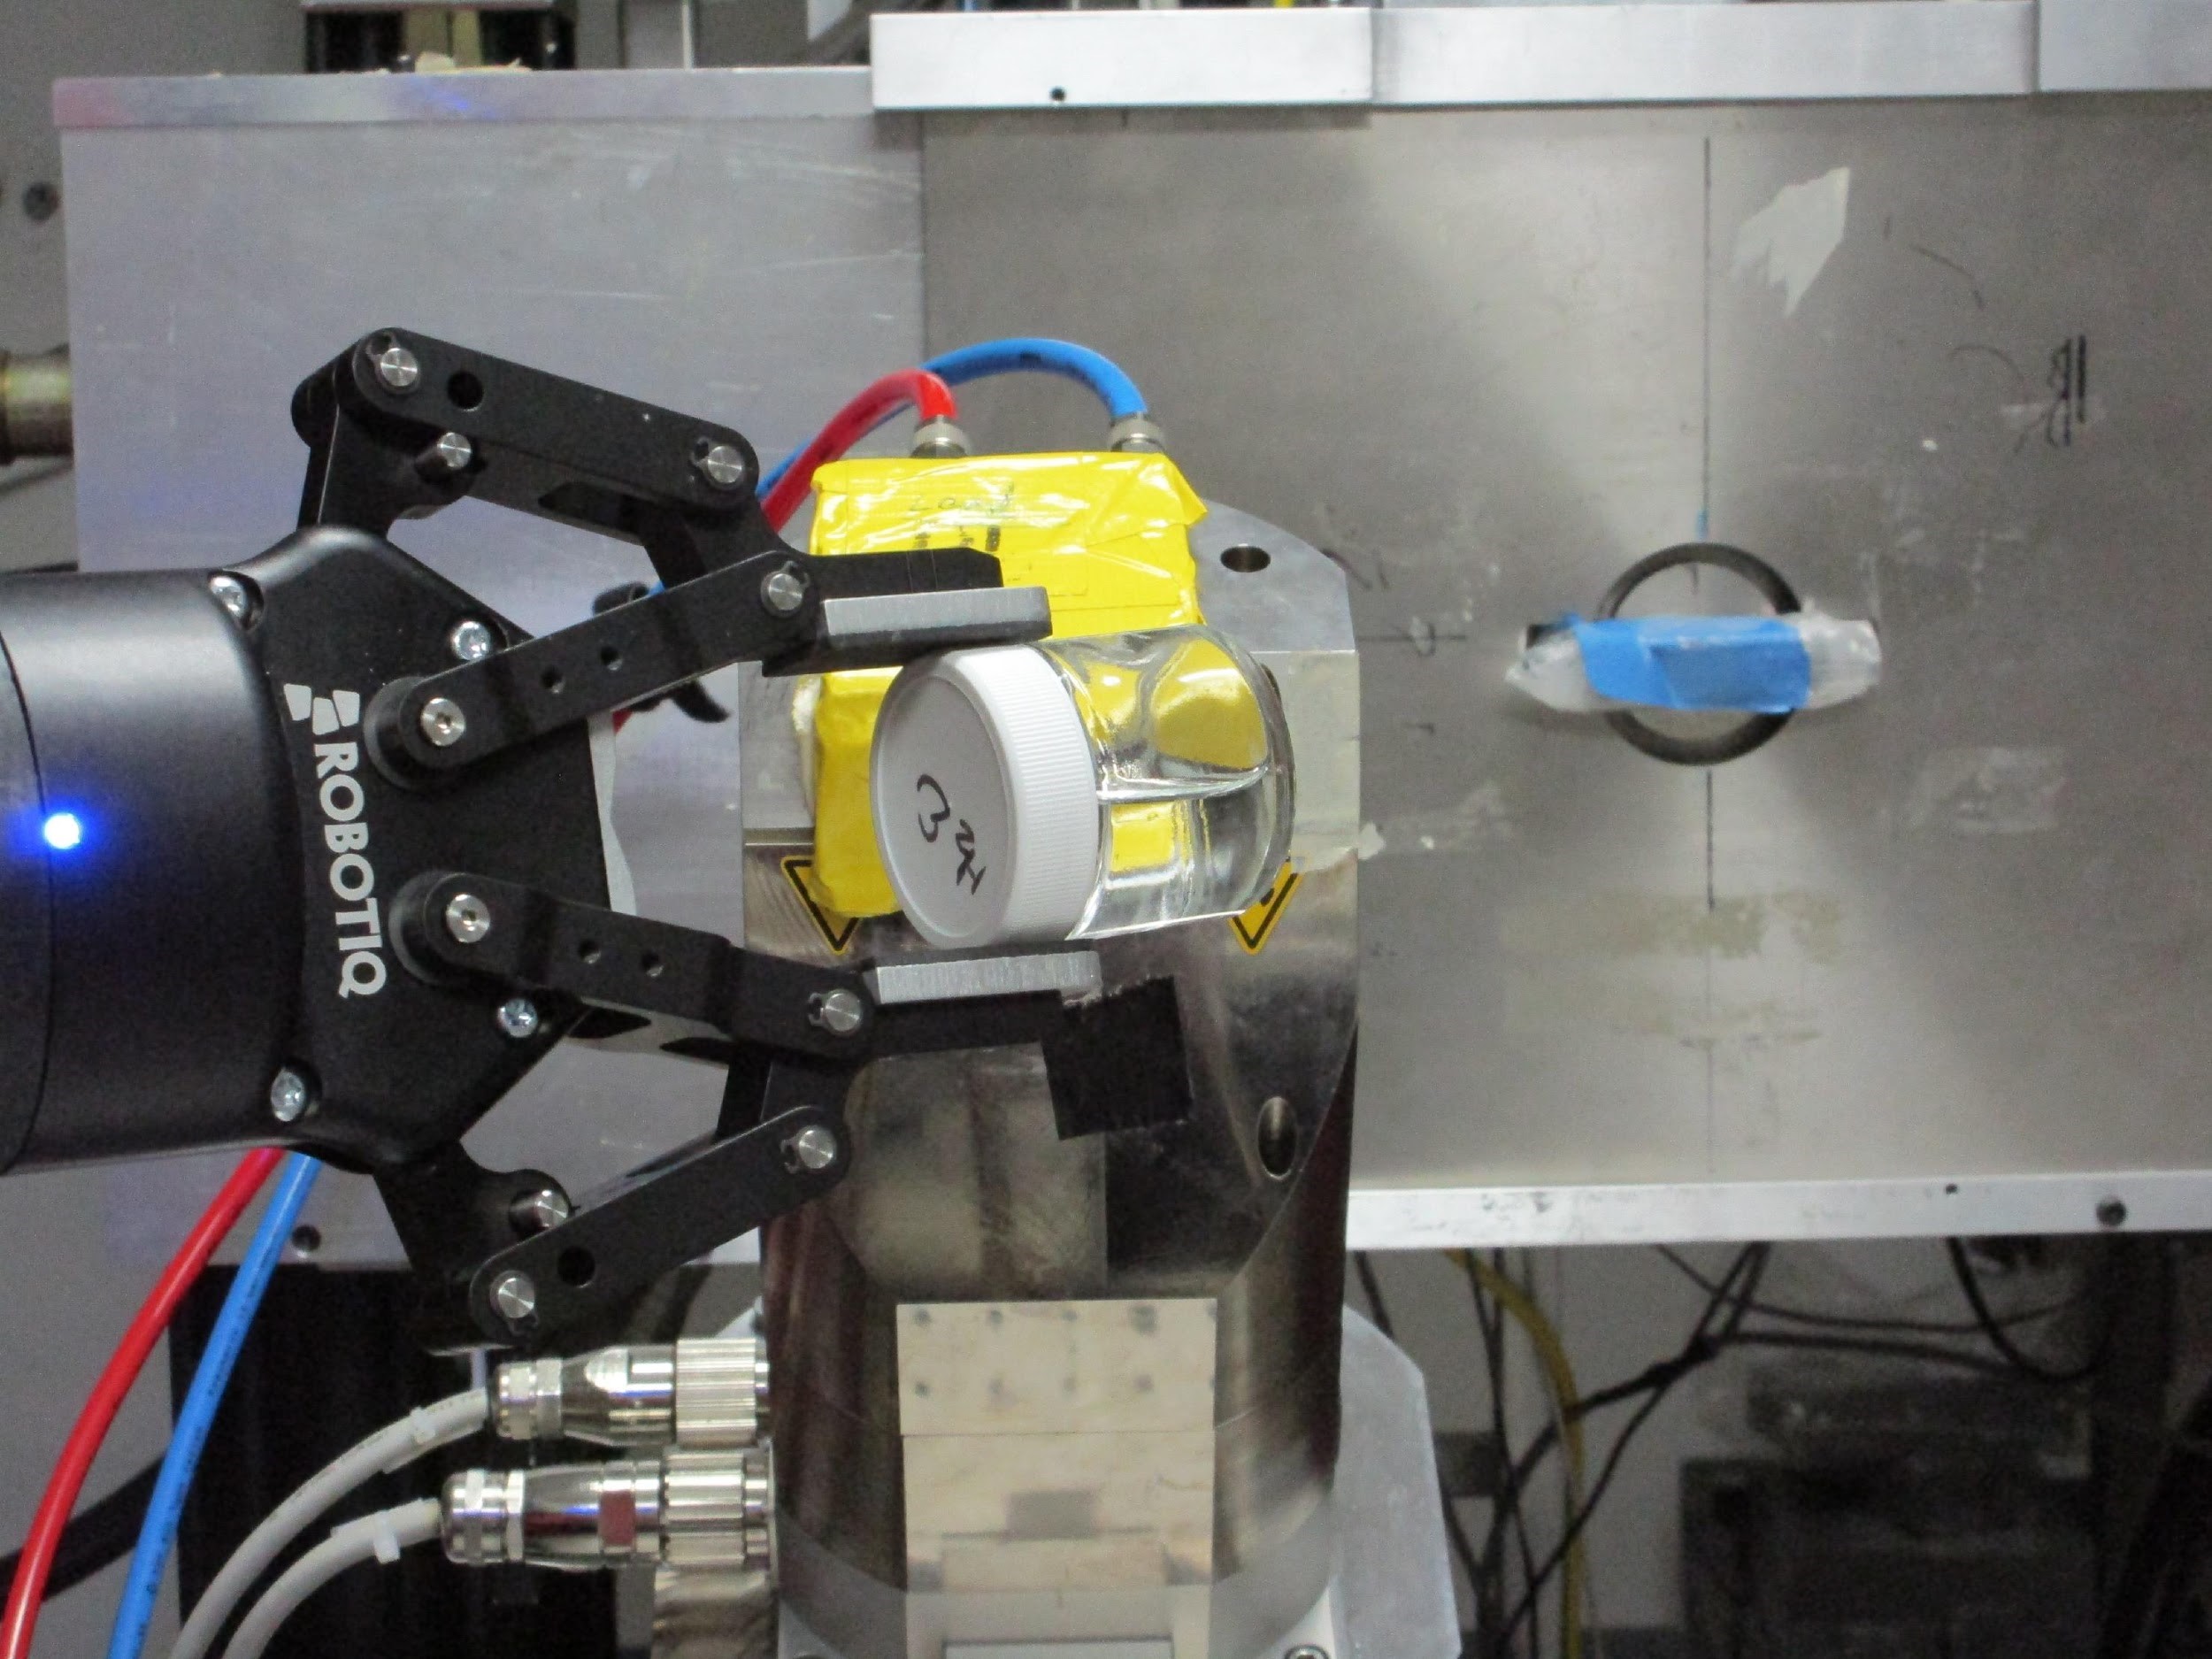 Robotiq 2-Finger Gripper Handles Radiated Parts at Los Alamos National Laboratory